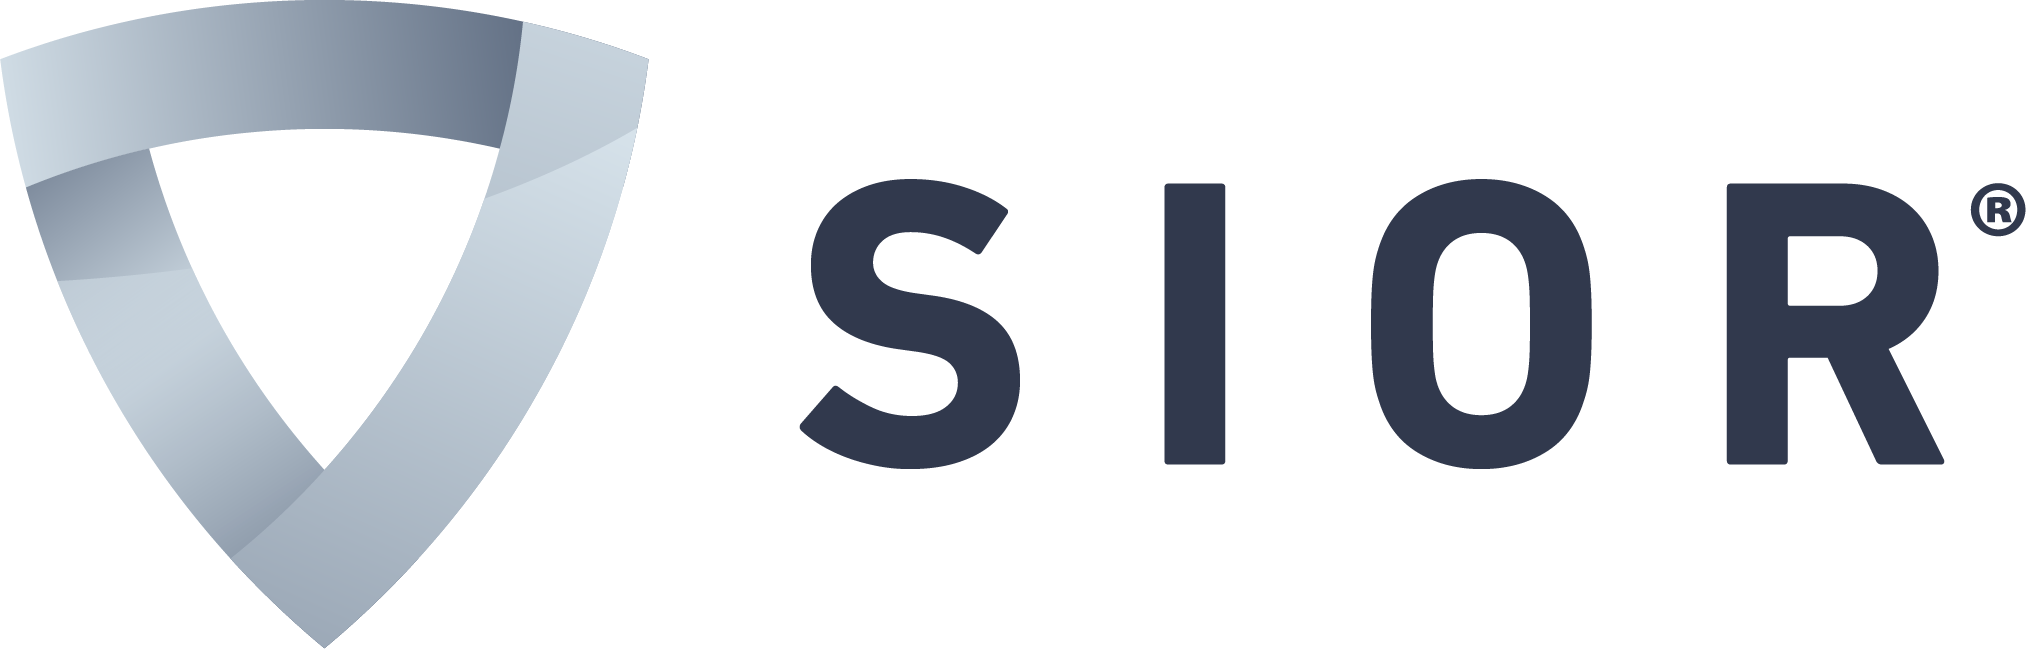 SIOR New Logo Horizontal Standard.png